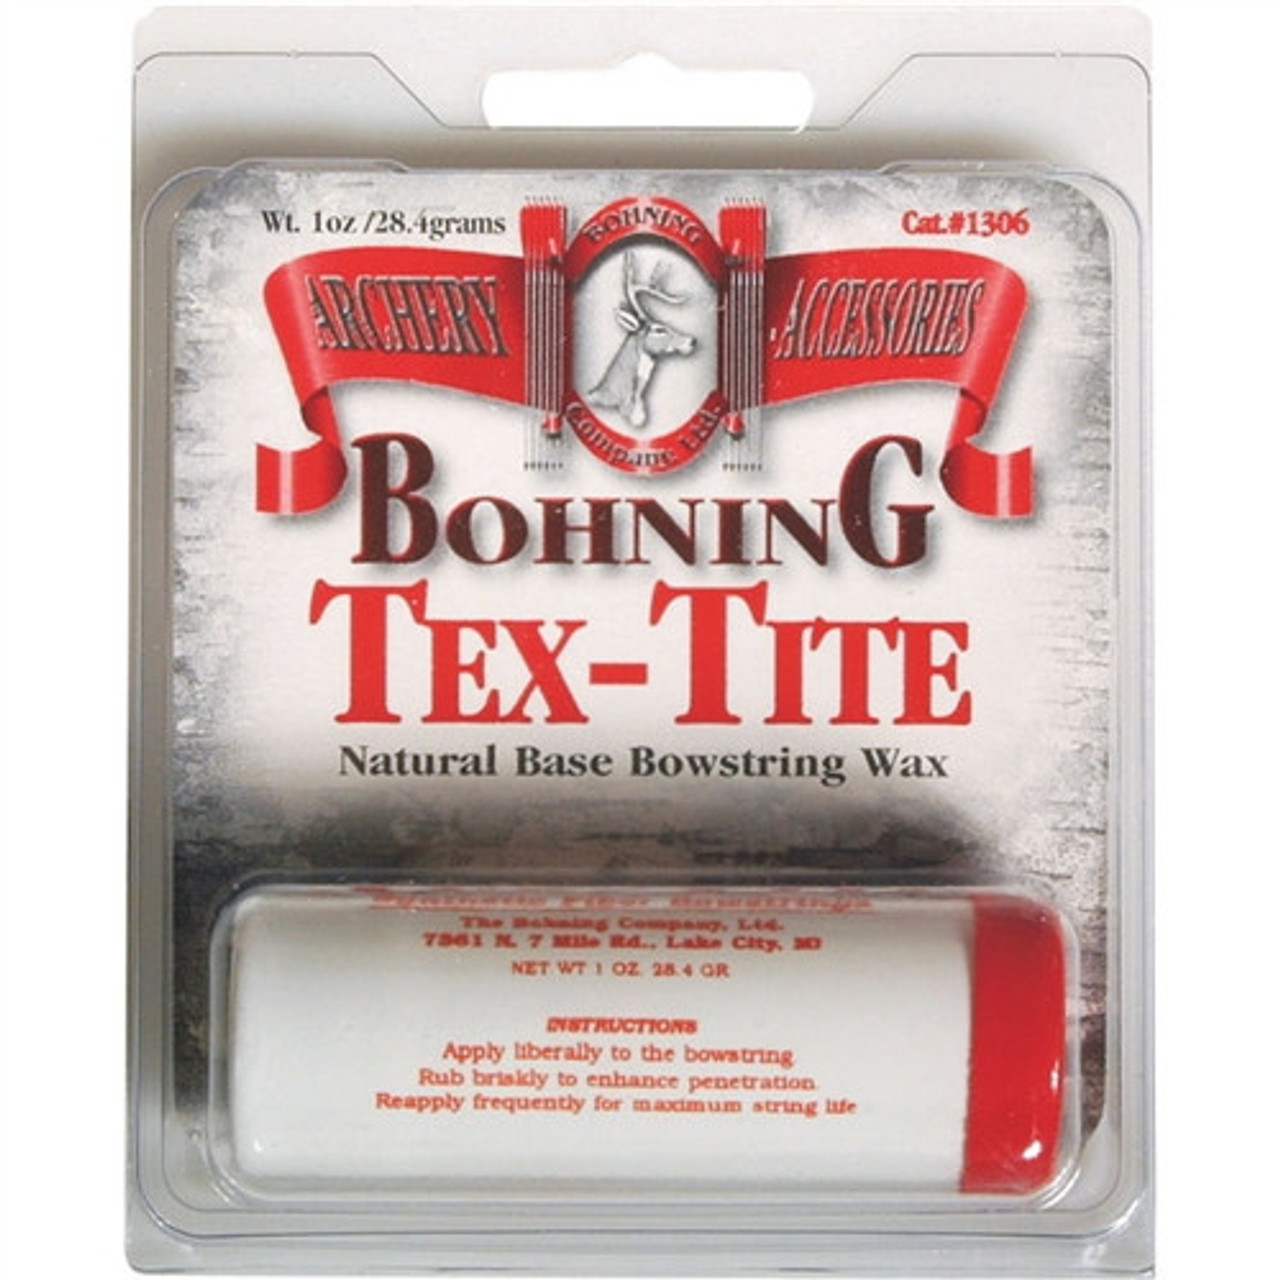 Bohning Tex-Tite Bow String Wax